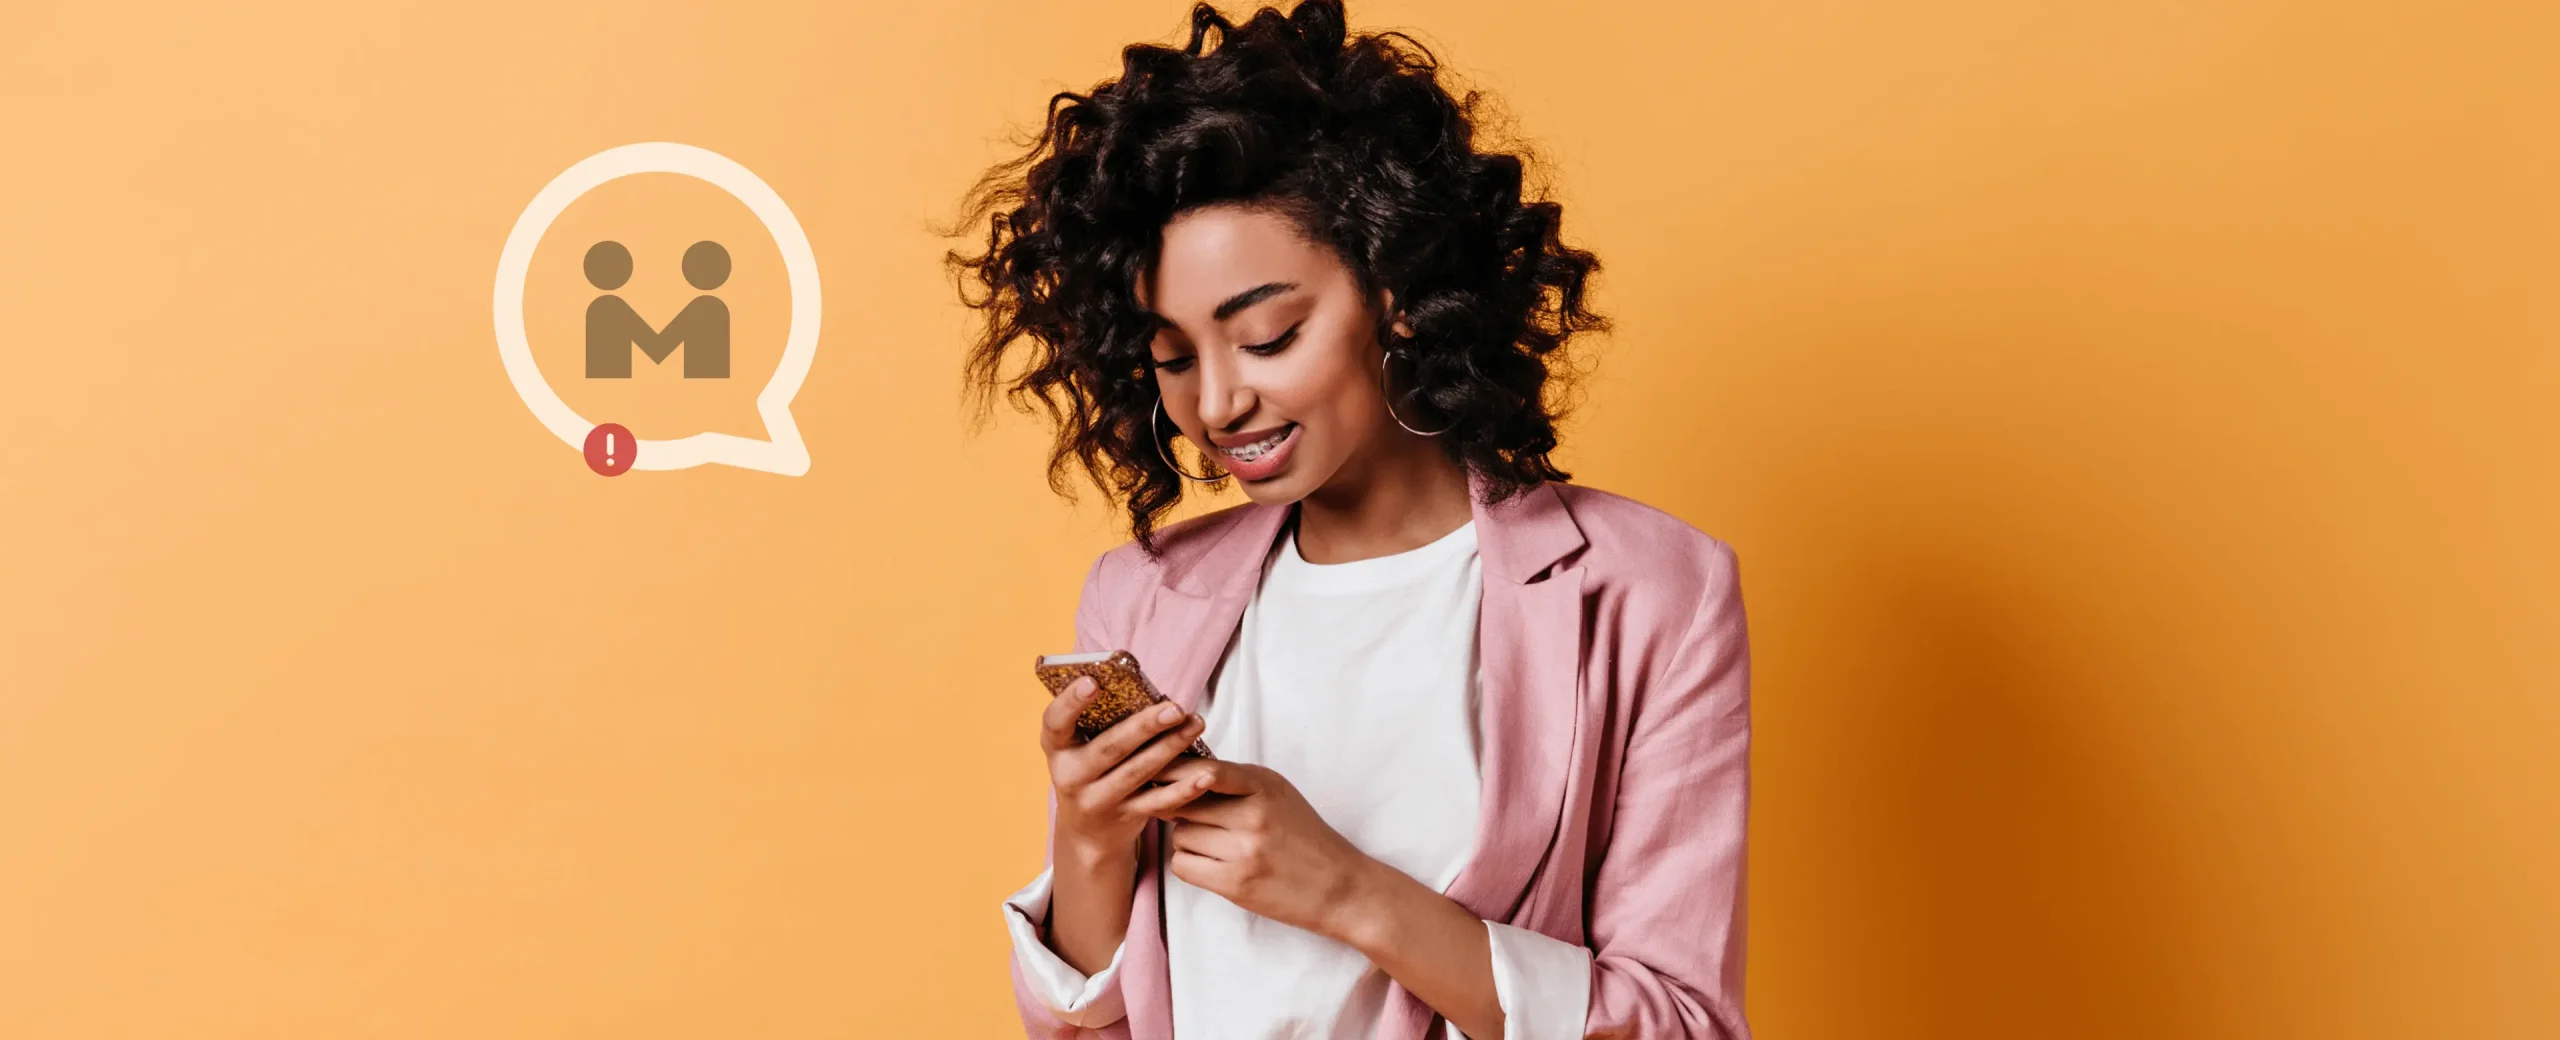 woman on phone chatting orange background icon